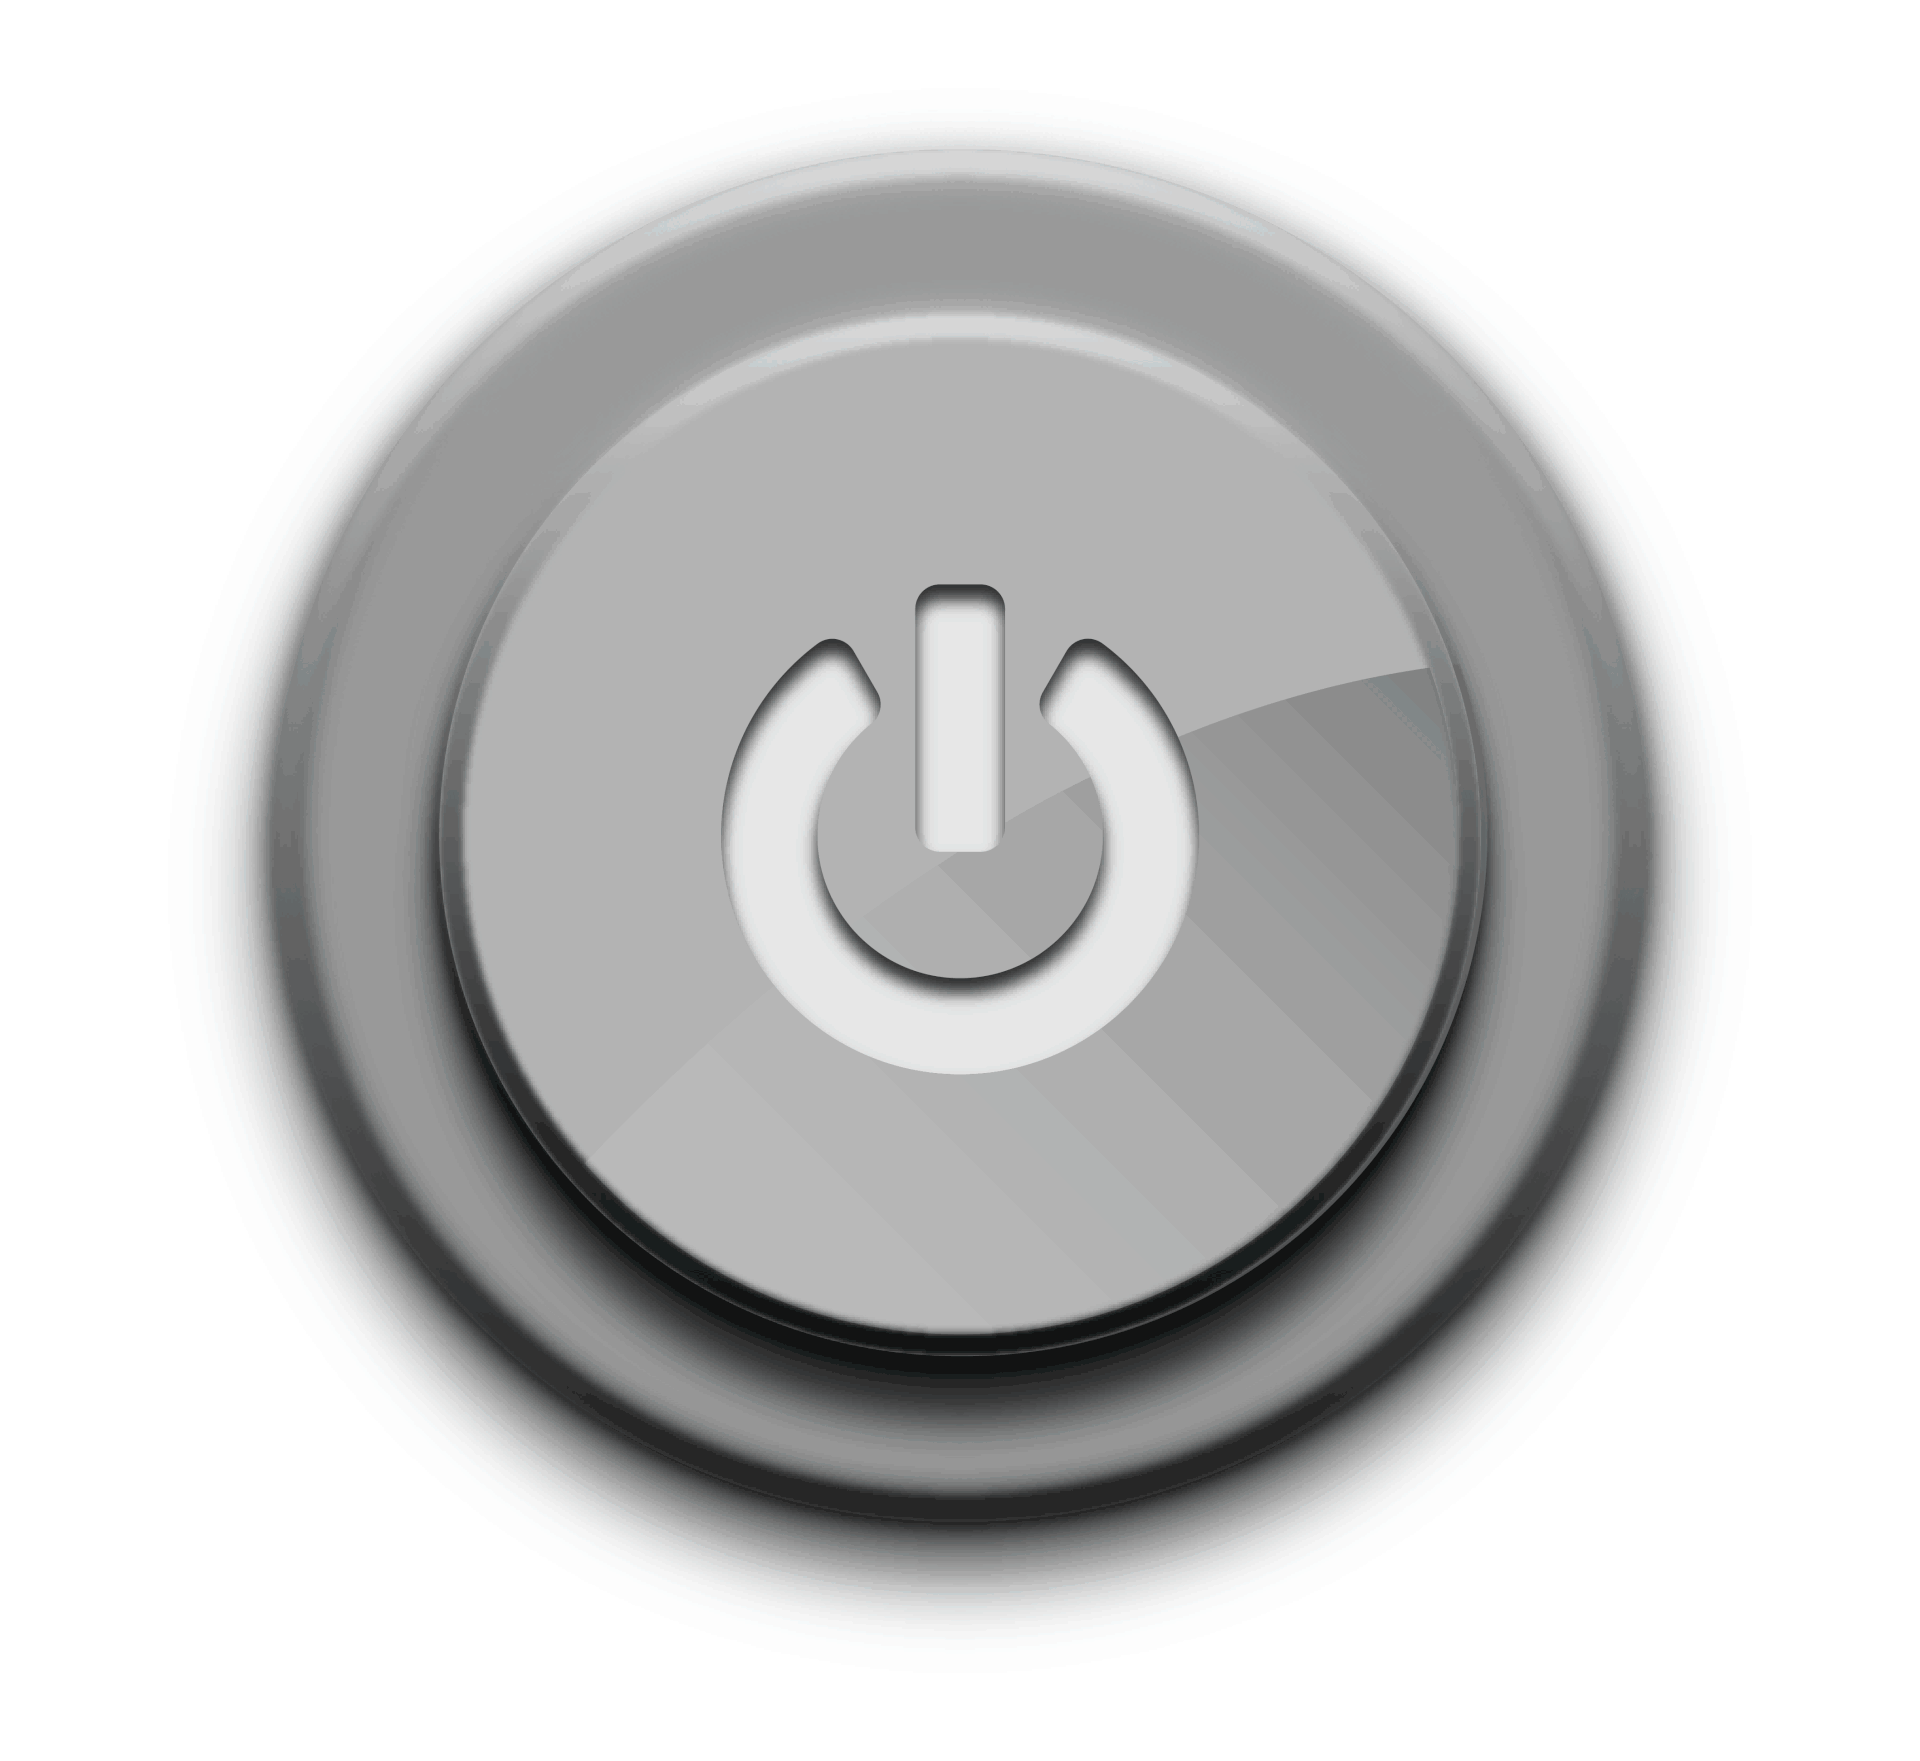 Кнопка Power. Круглая кнопка. Кнопка звонка круглая. Изображение кнопки. Программа button